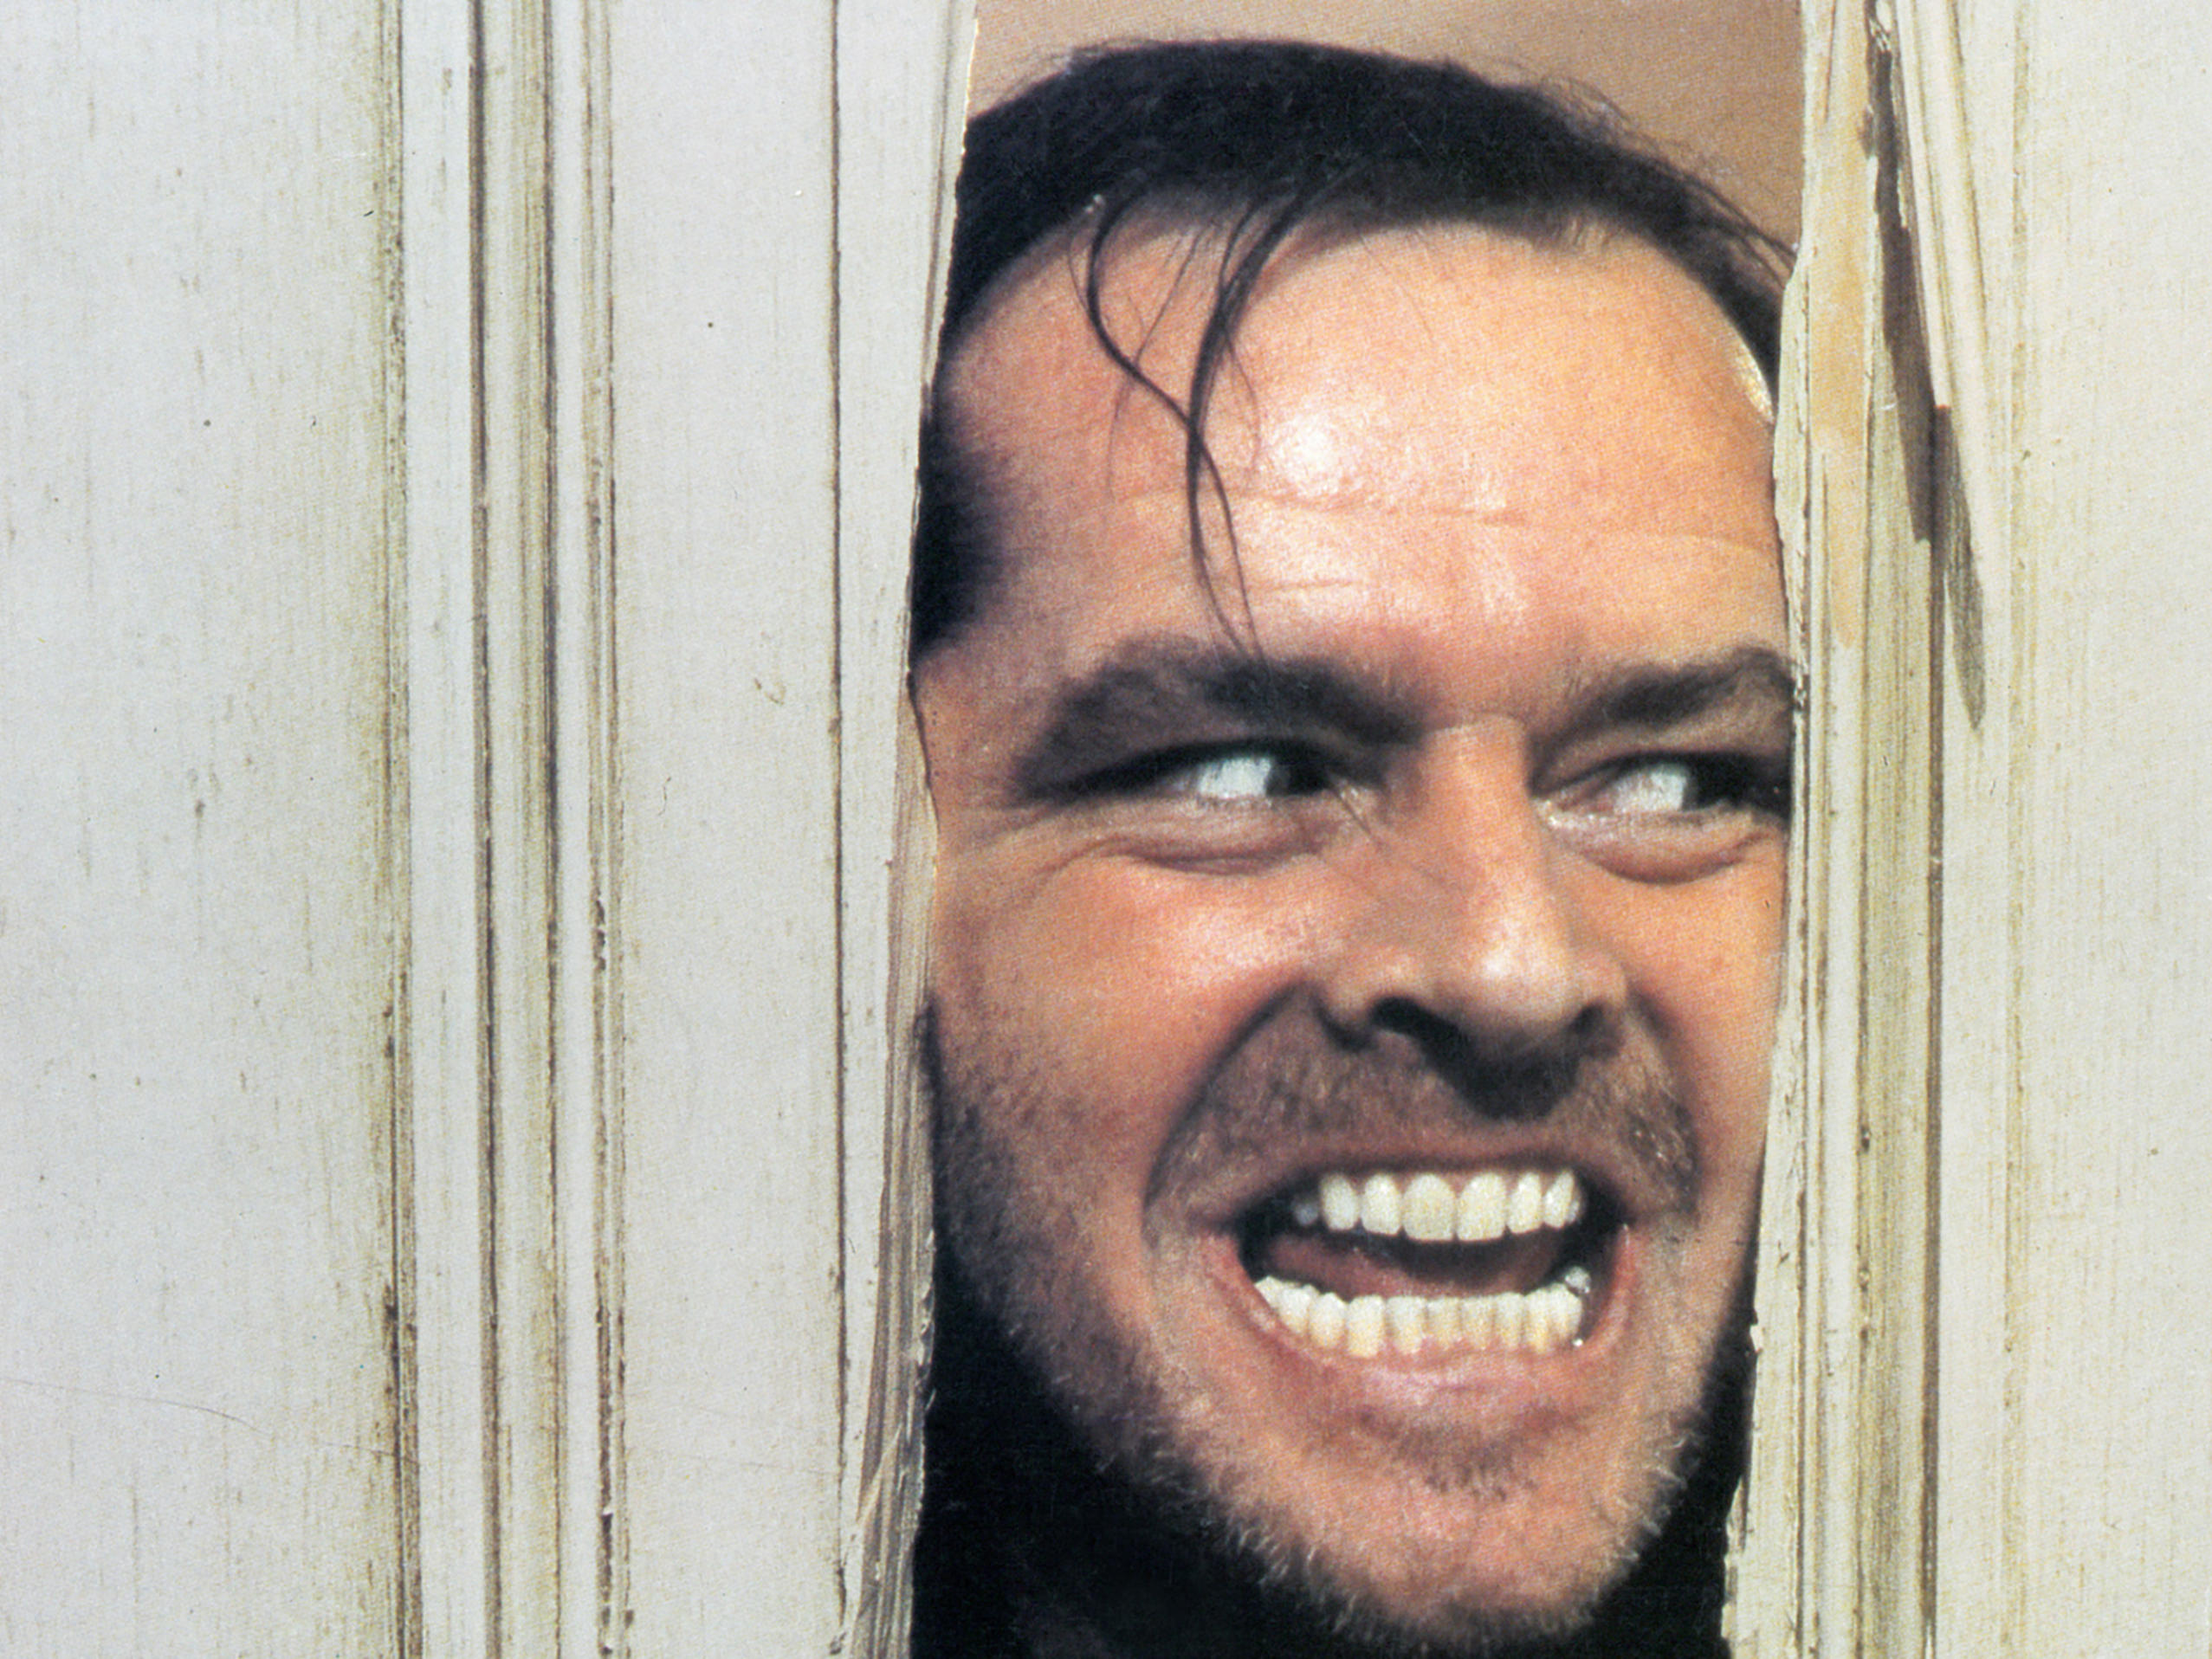 Jack Nicholson in “The Shining” (1980)